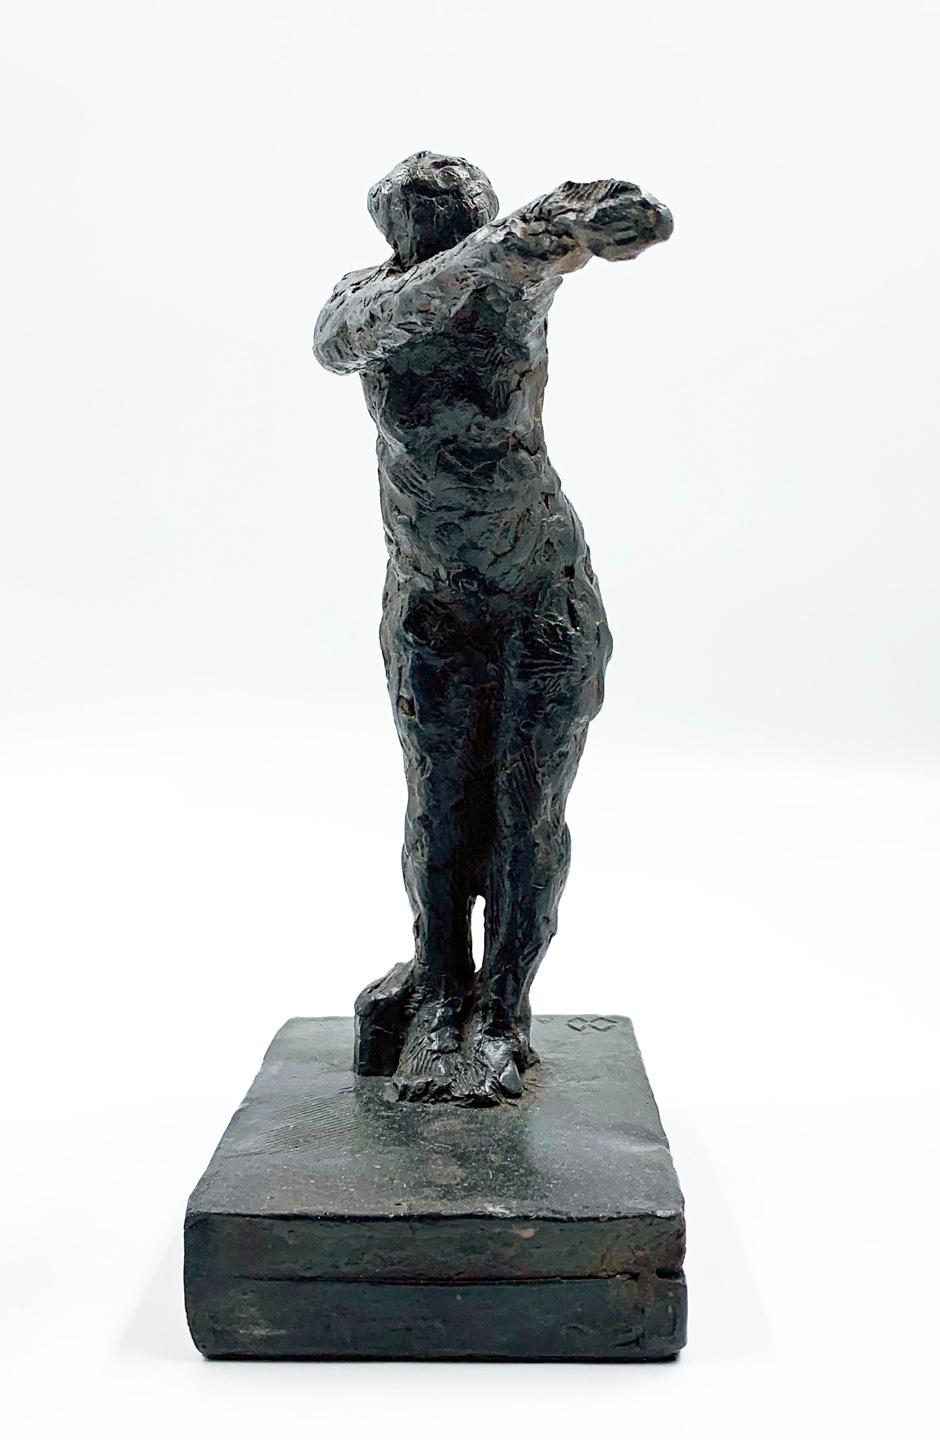 Dancing with my Handbag - contemporary figurative bronze sculpture - Sculpture by Manny Woodard